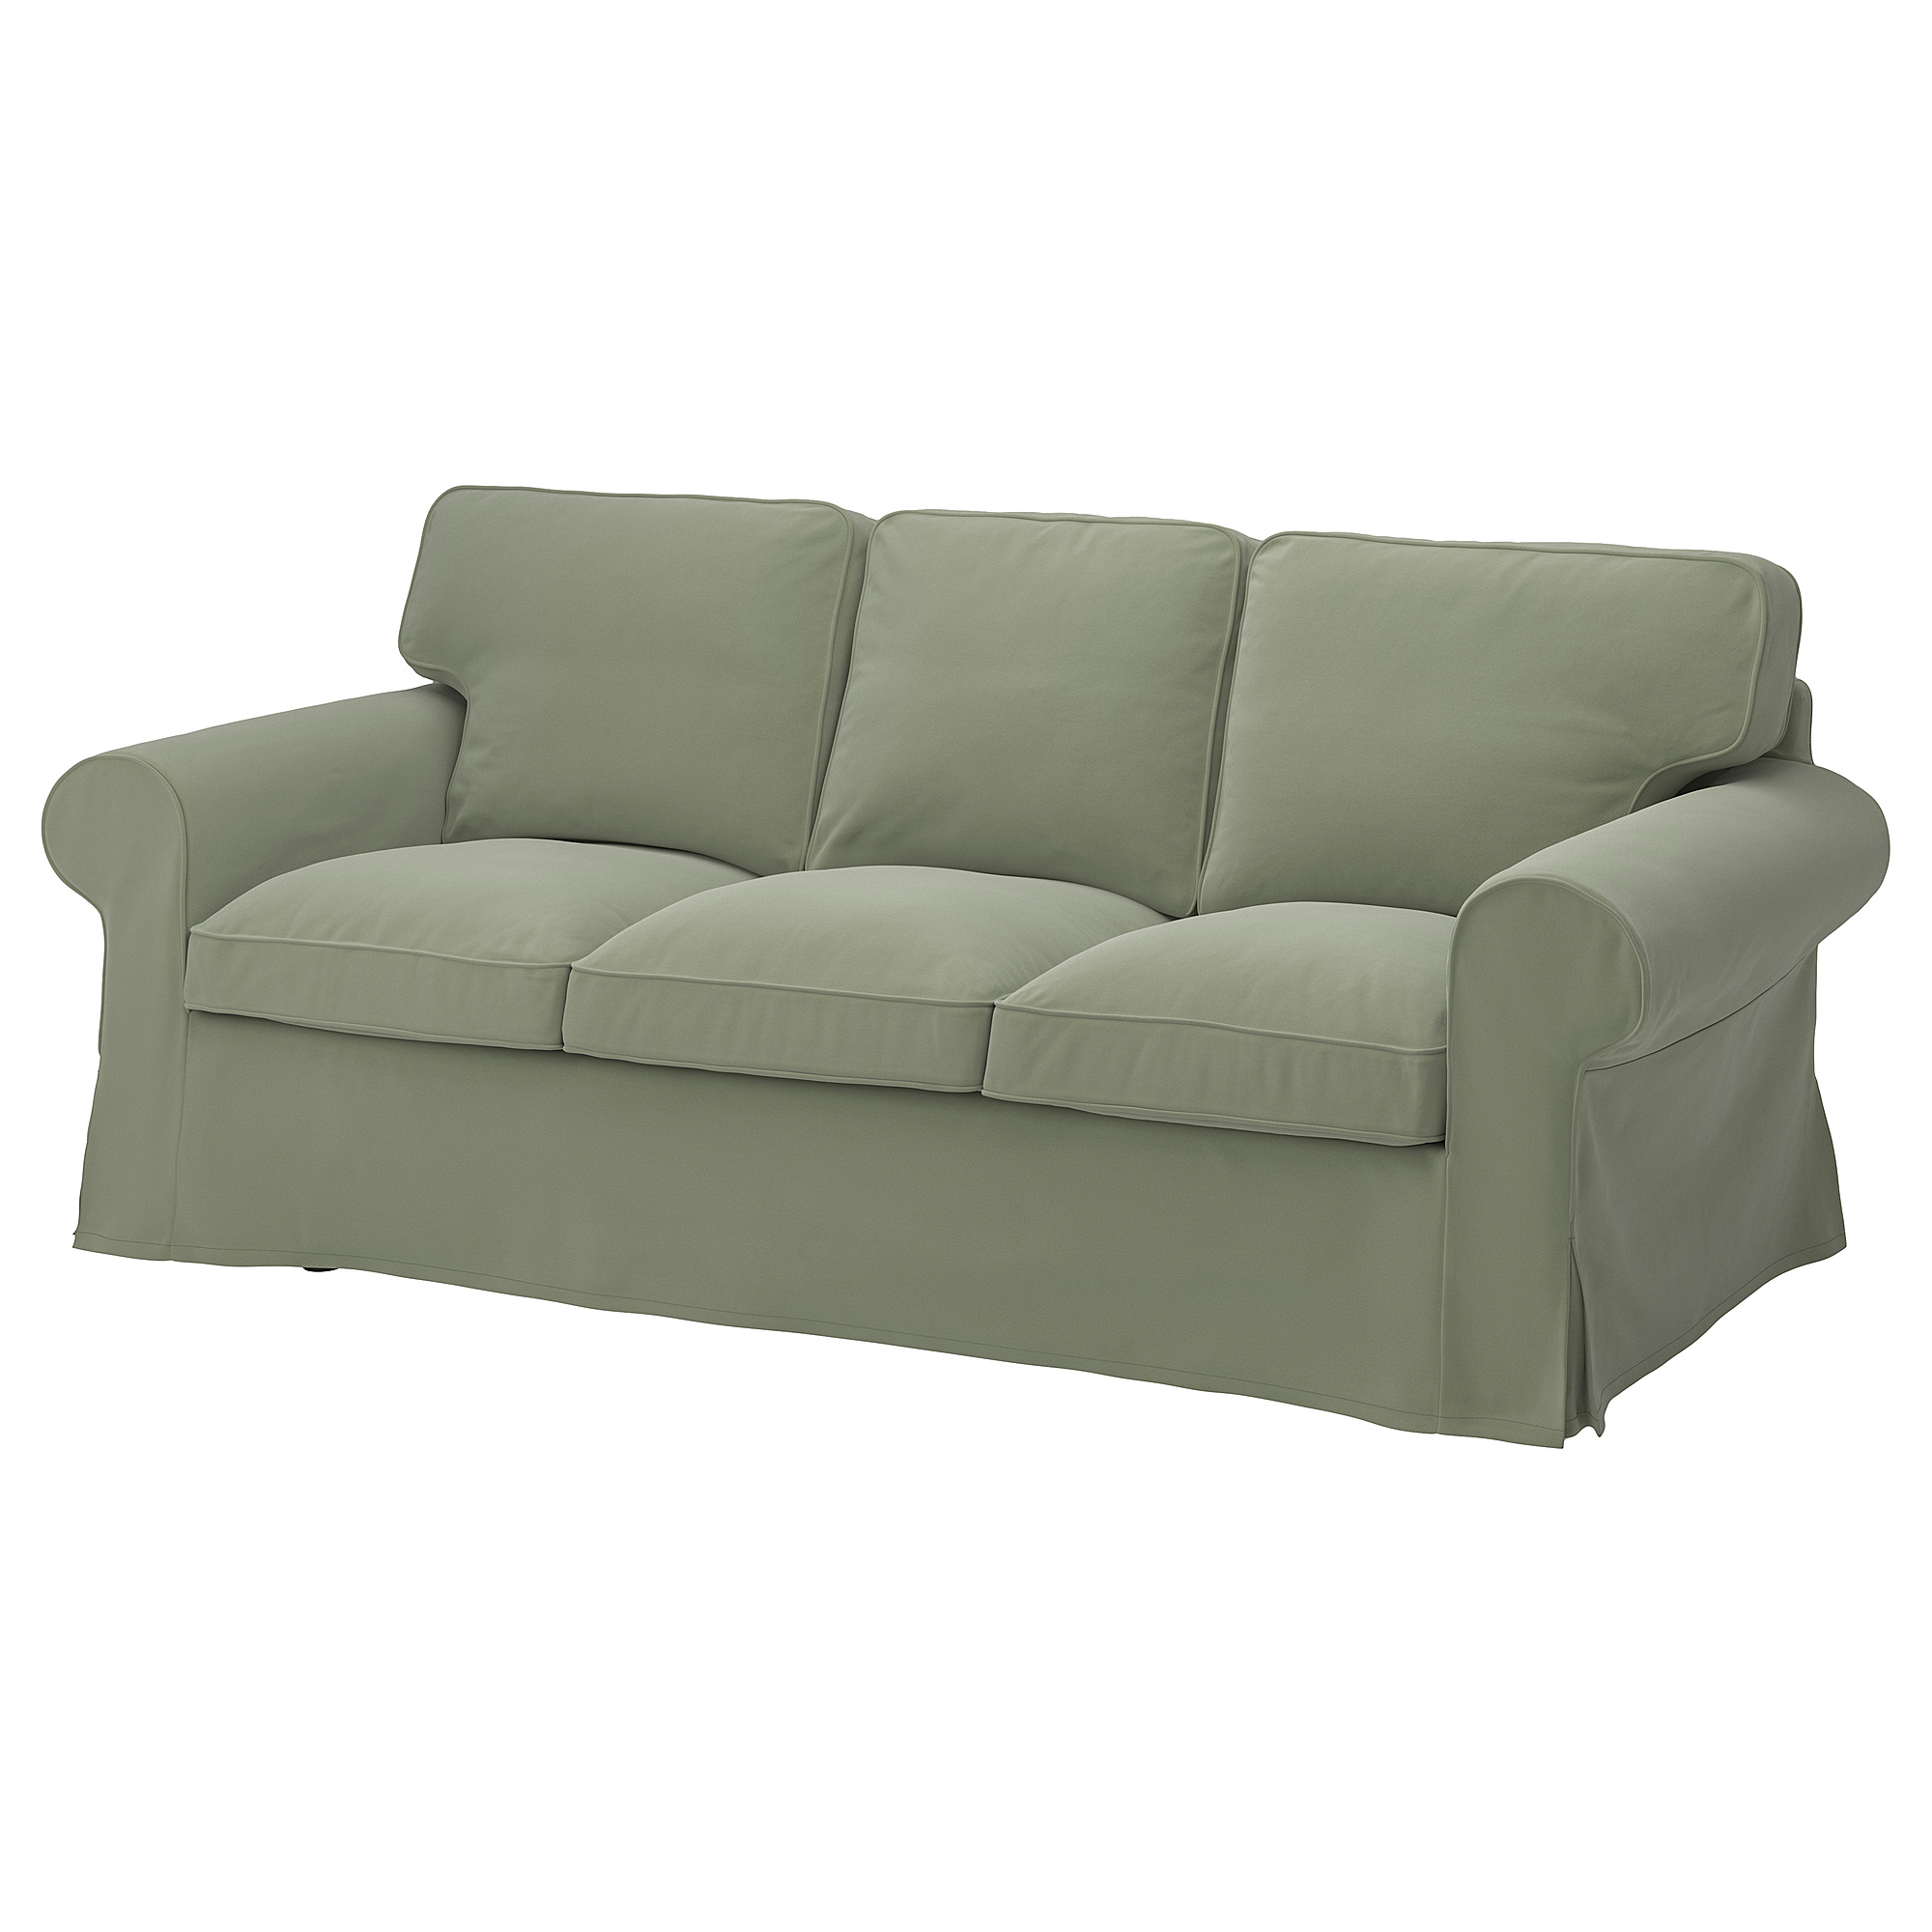 EKTORP cover for 3-seat sofa